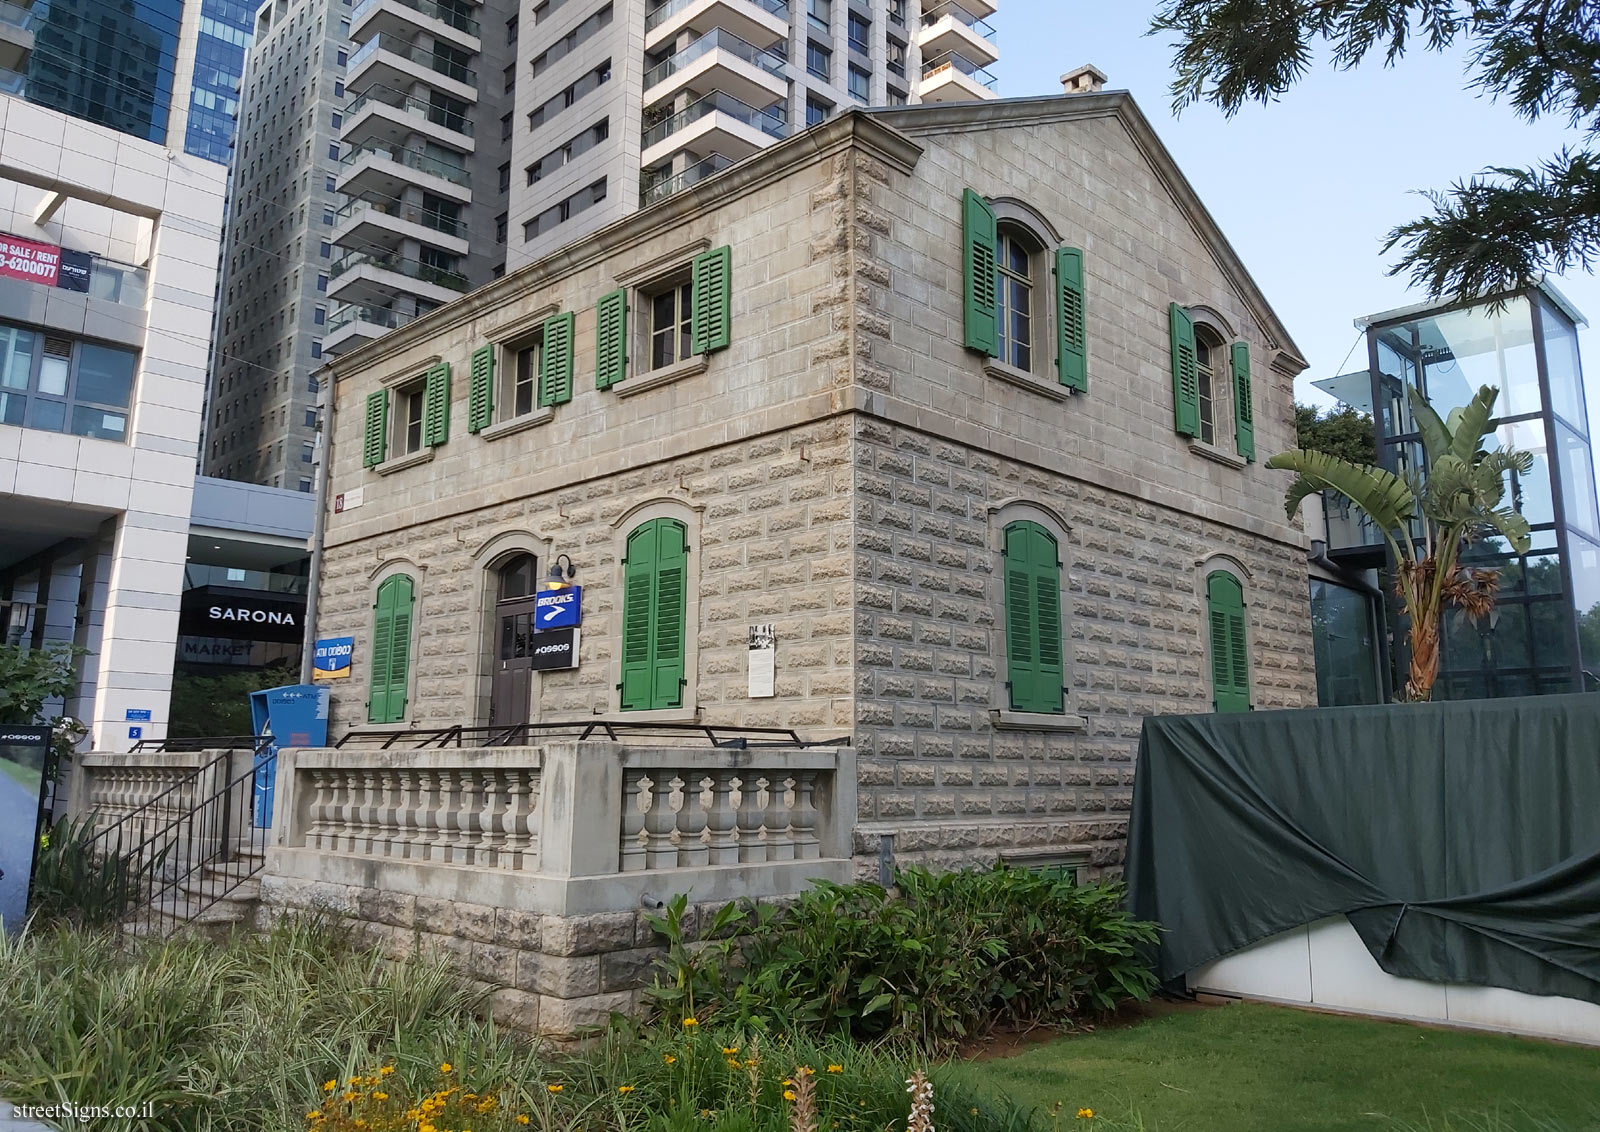 Tel Aviv - Sarona complex - buildings for preservation - Glenk House